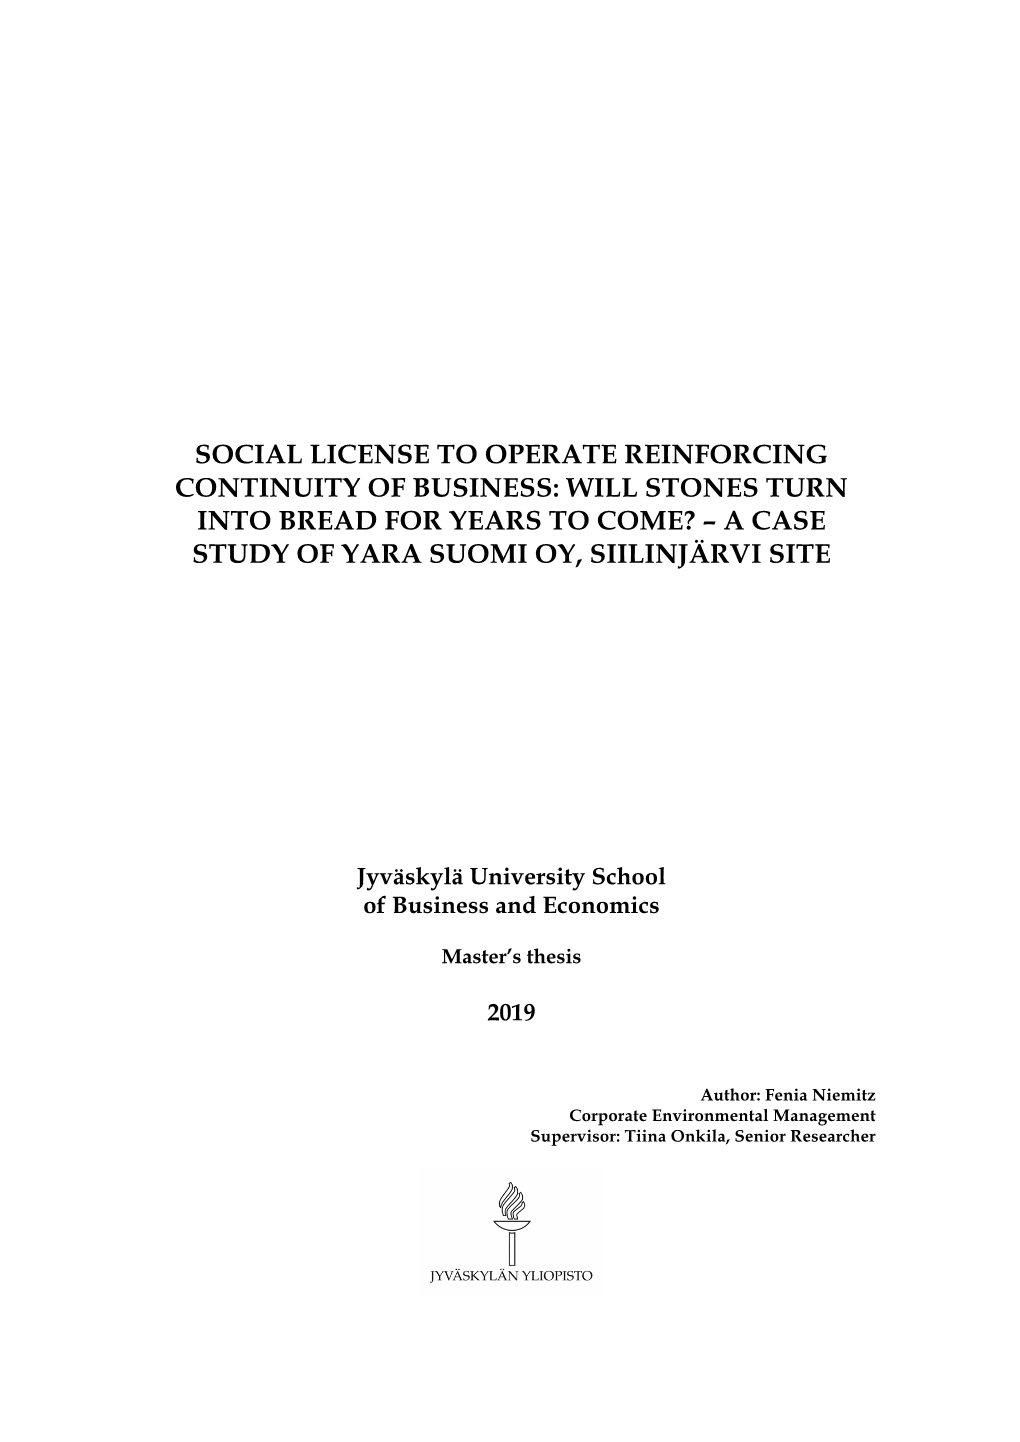 A Case Study of Yara Suomi Oy, Siilinjärvi Site